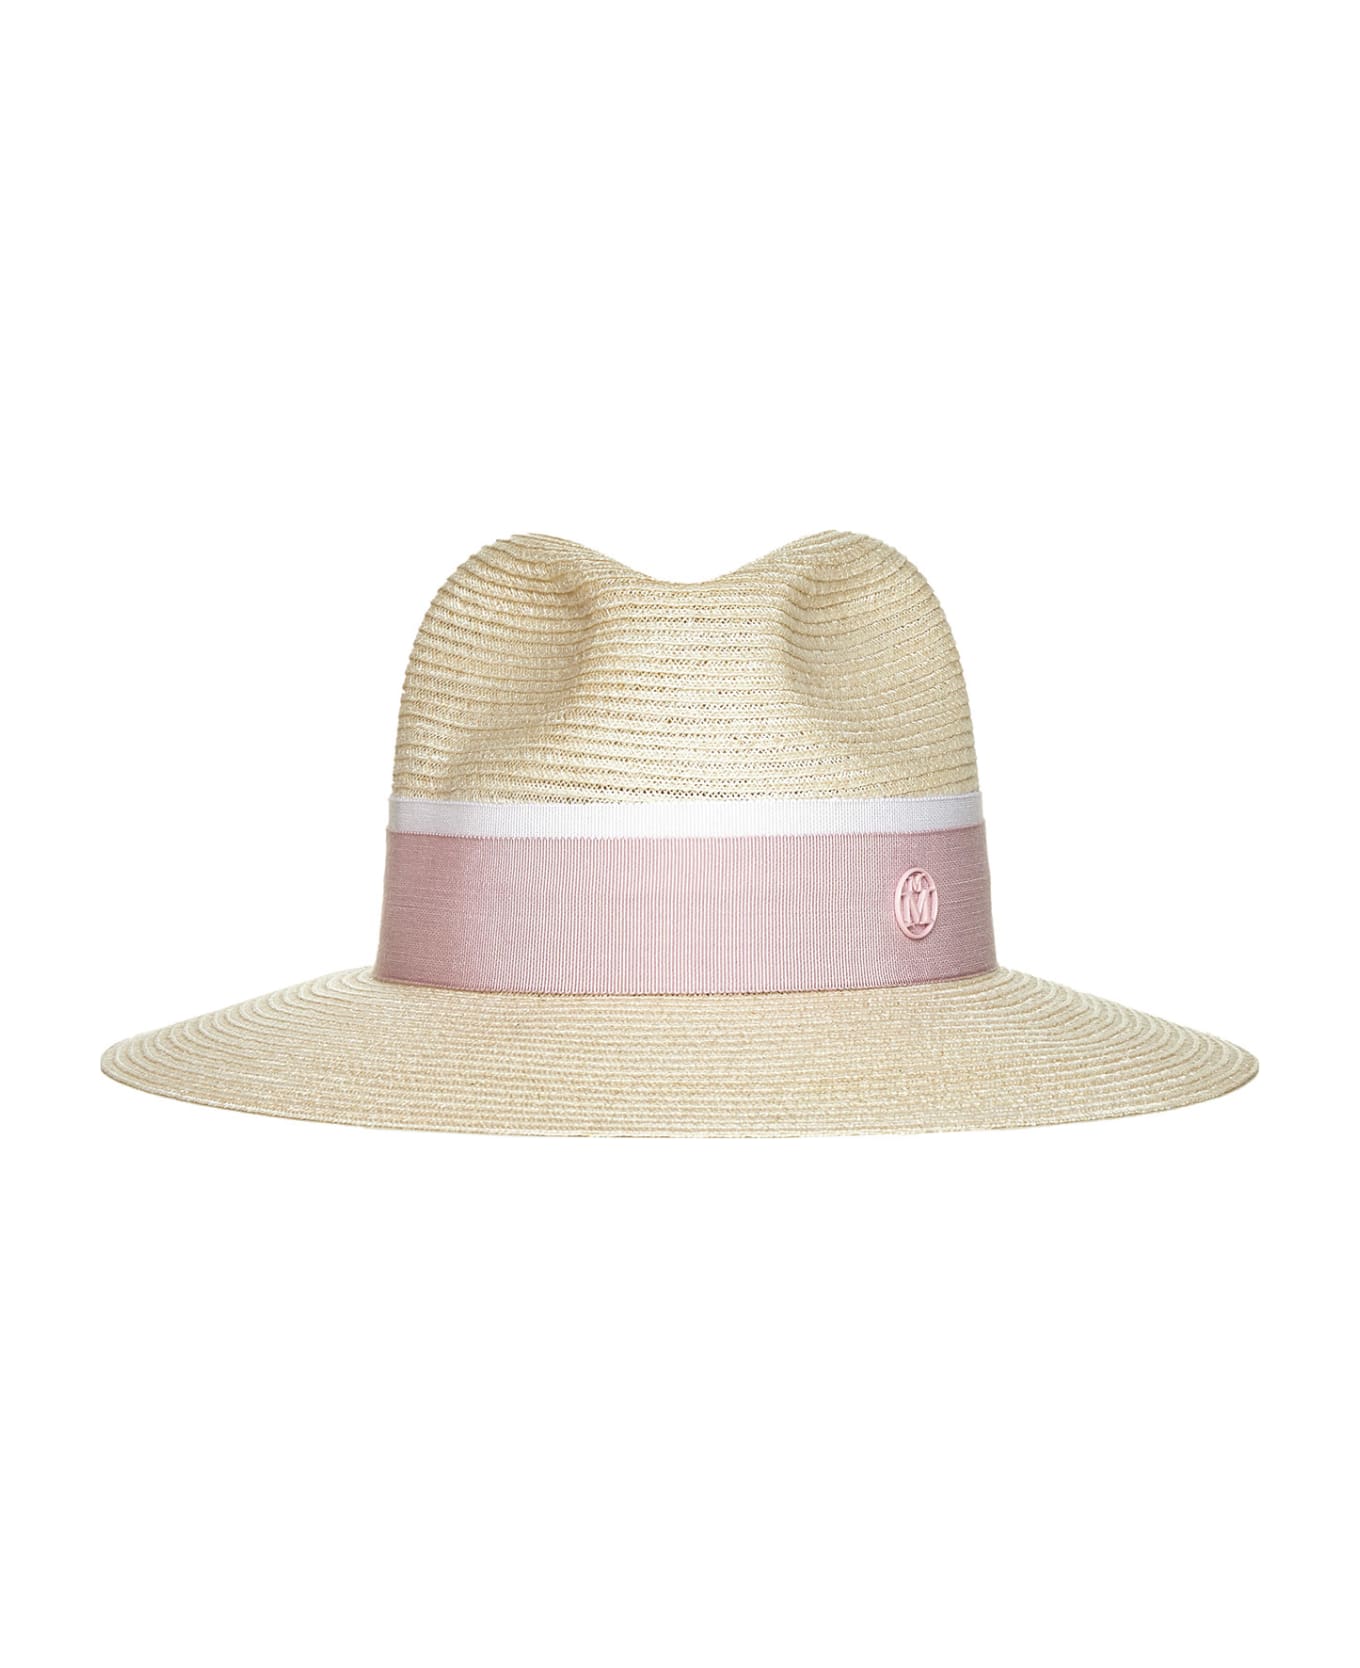 Maison Michel Hat - Natural pink 帽子